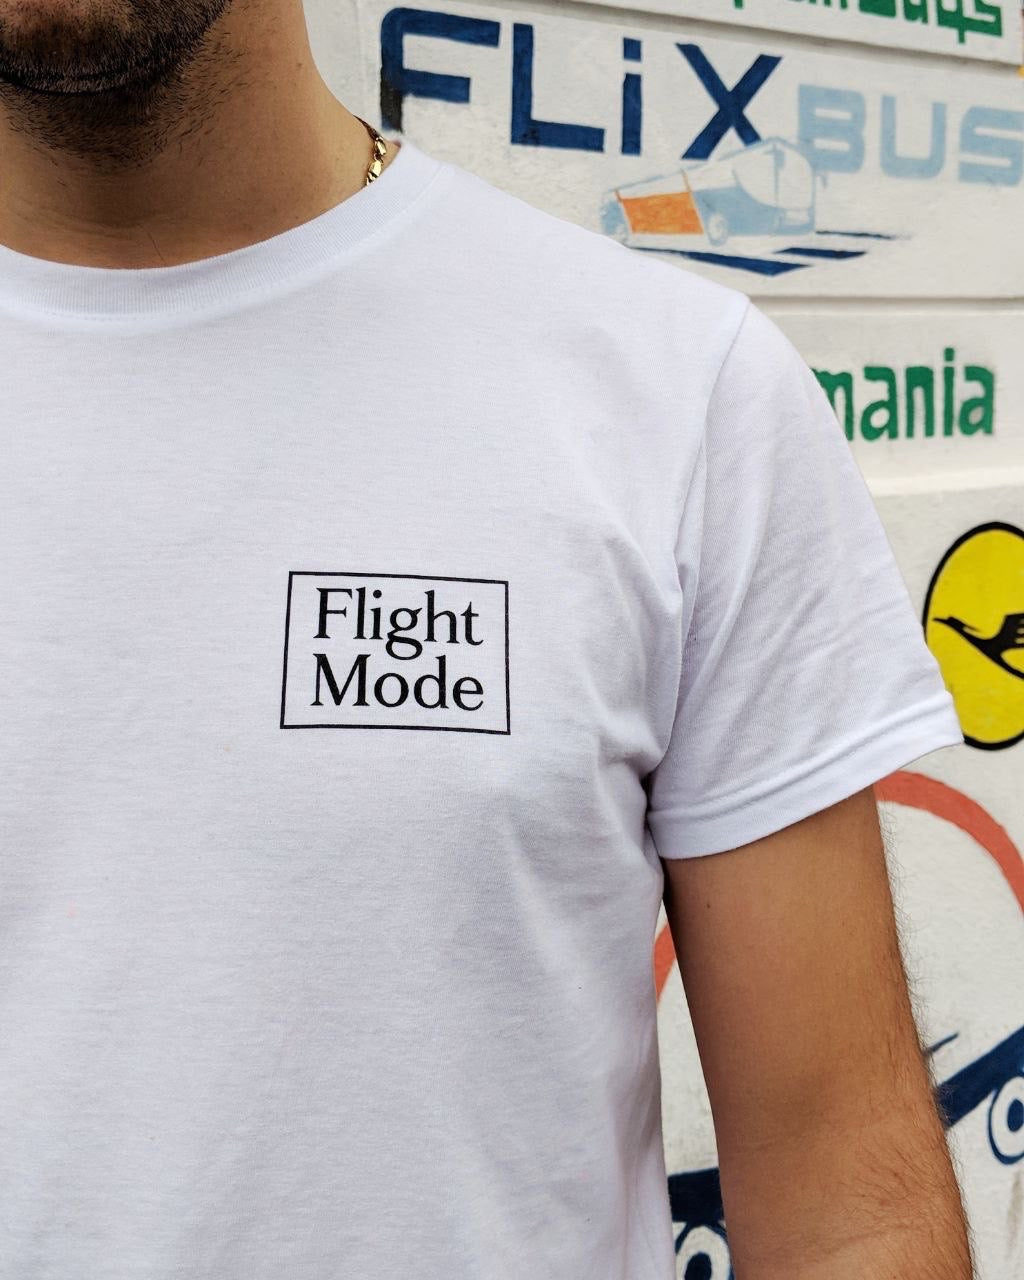 Flight Mode "Reference" Shirt